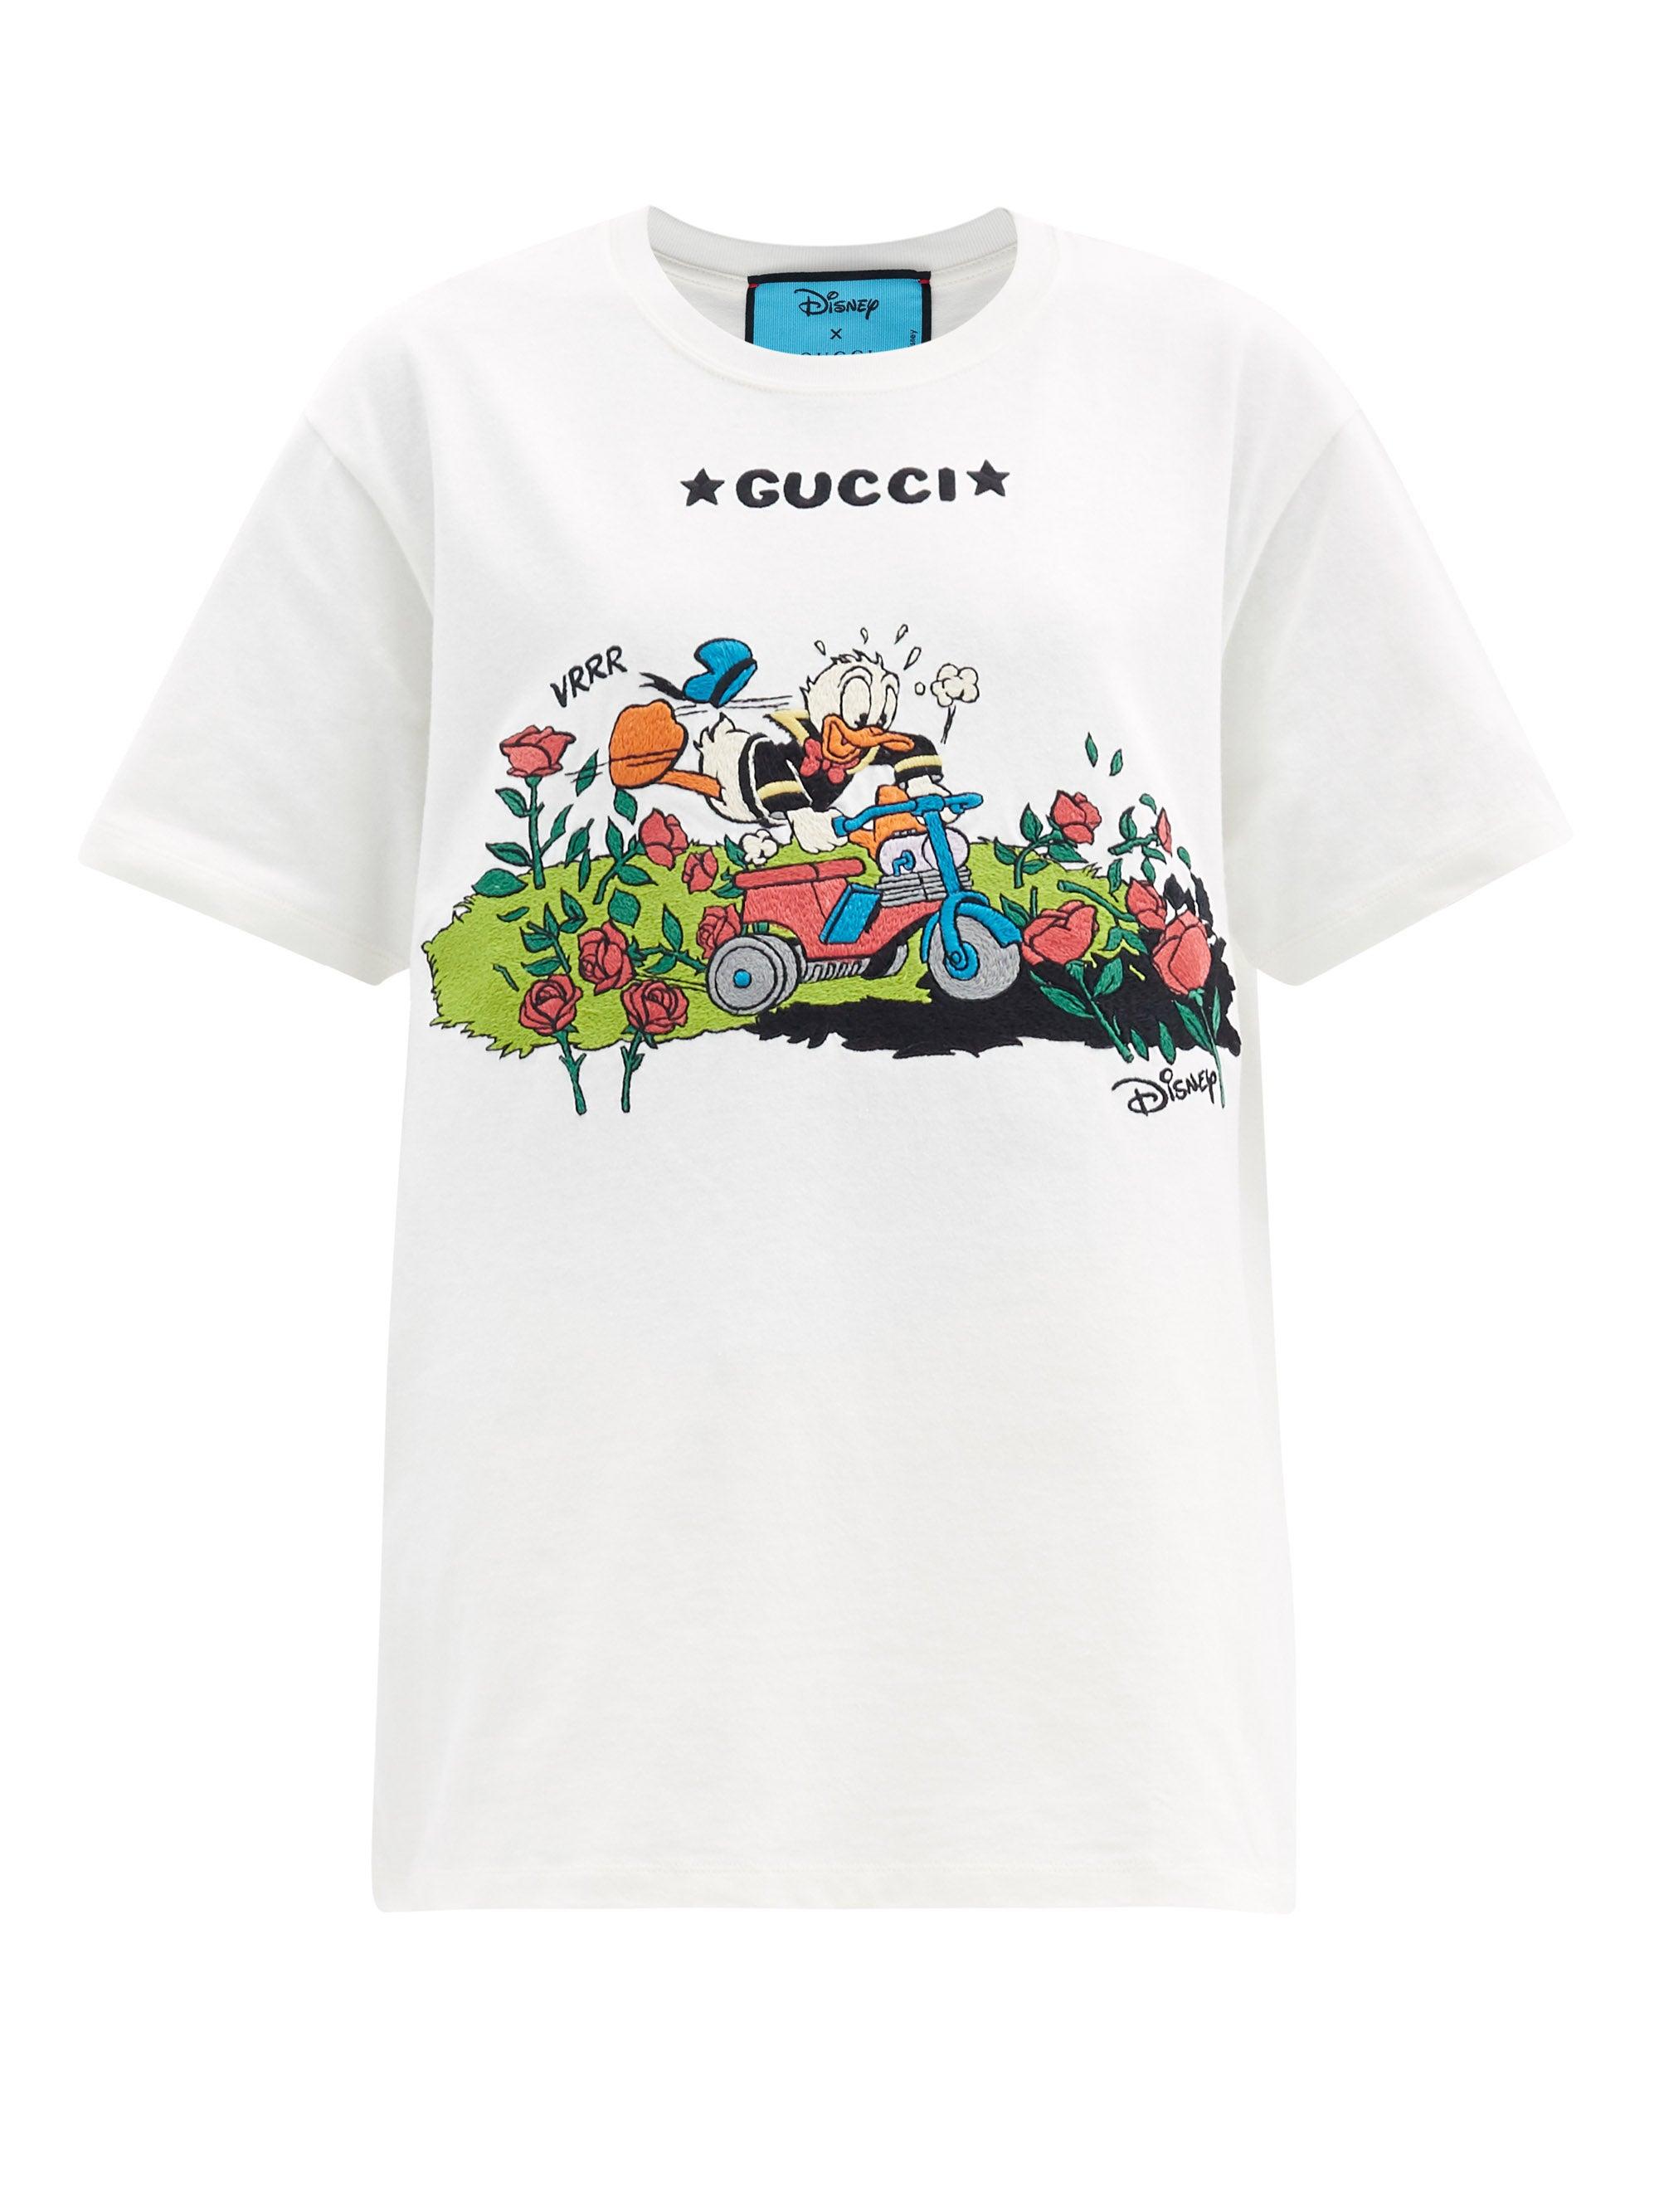 Gucci X Disney ドナルドダック コットンtシャツ ホワイト | Lyst